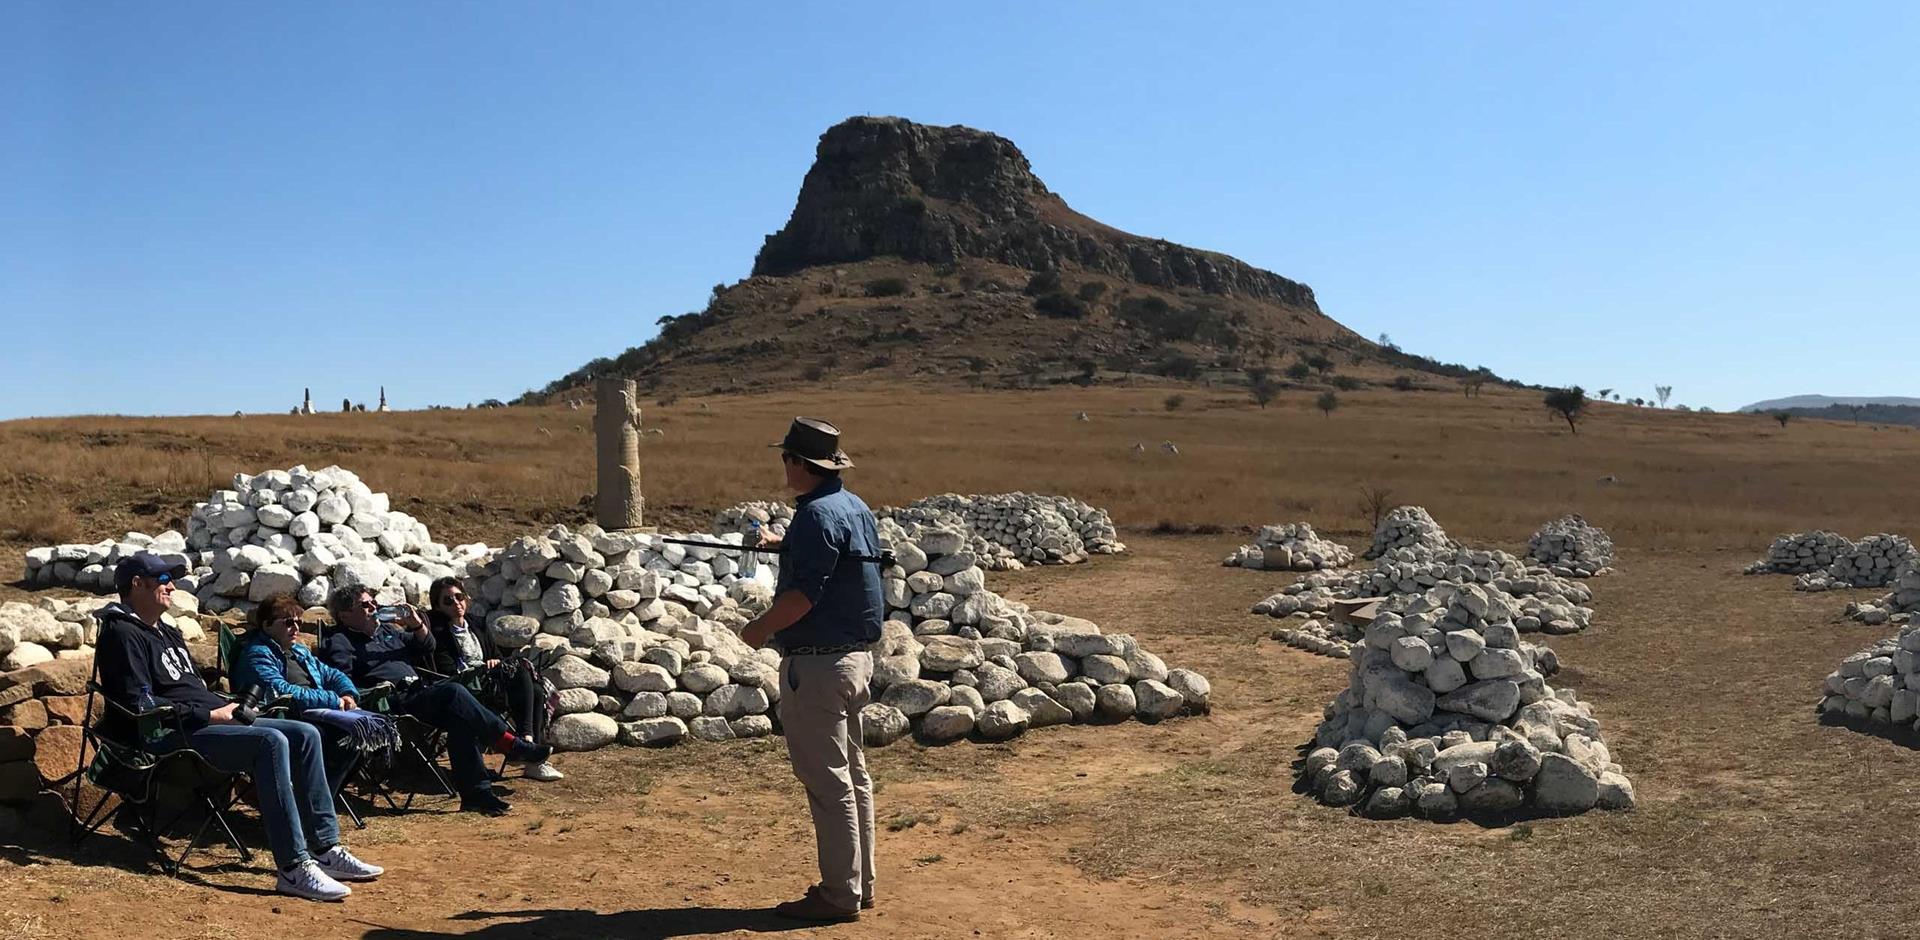 Battlefields tour of Islandlwana